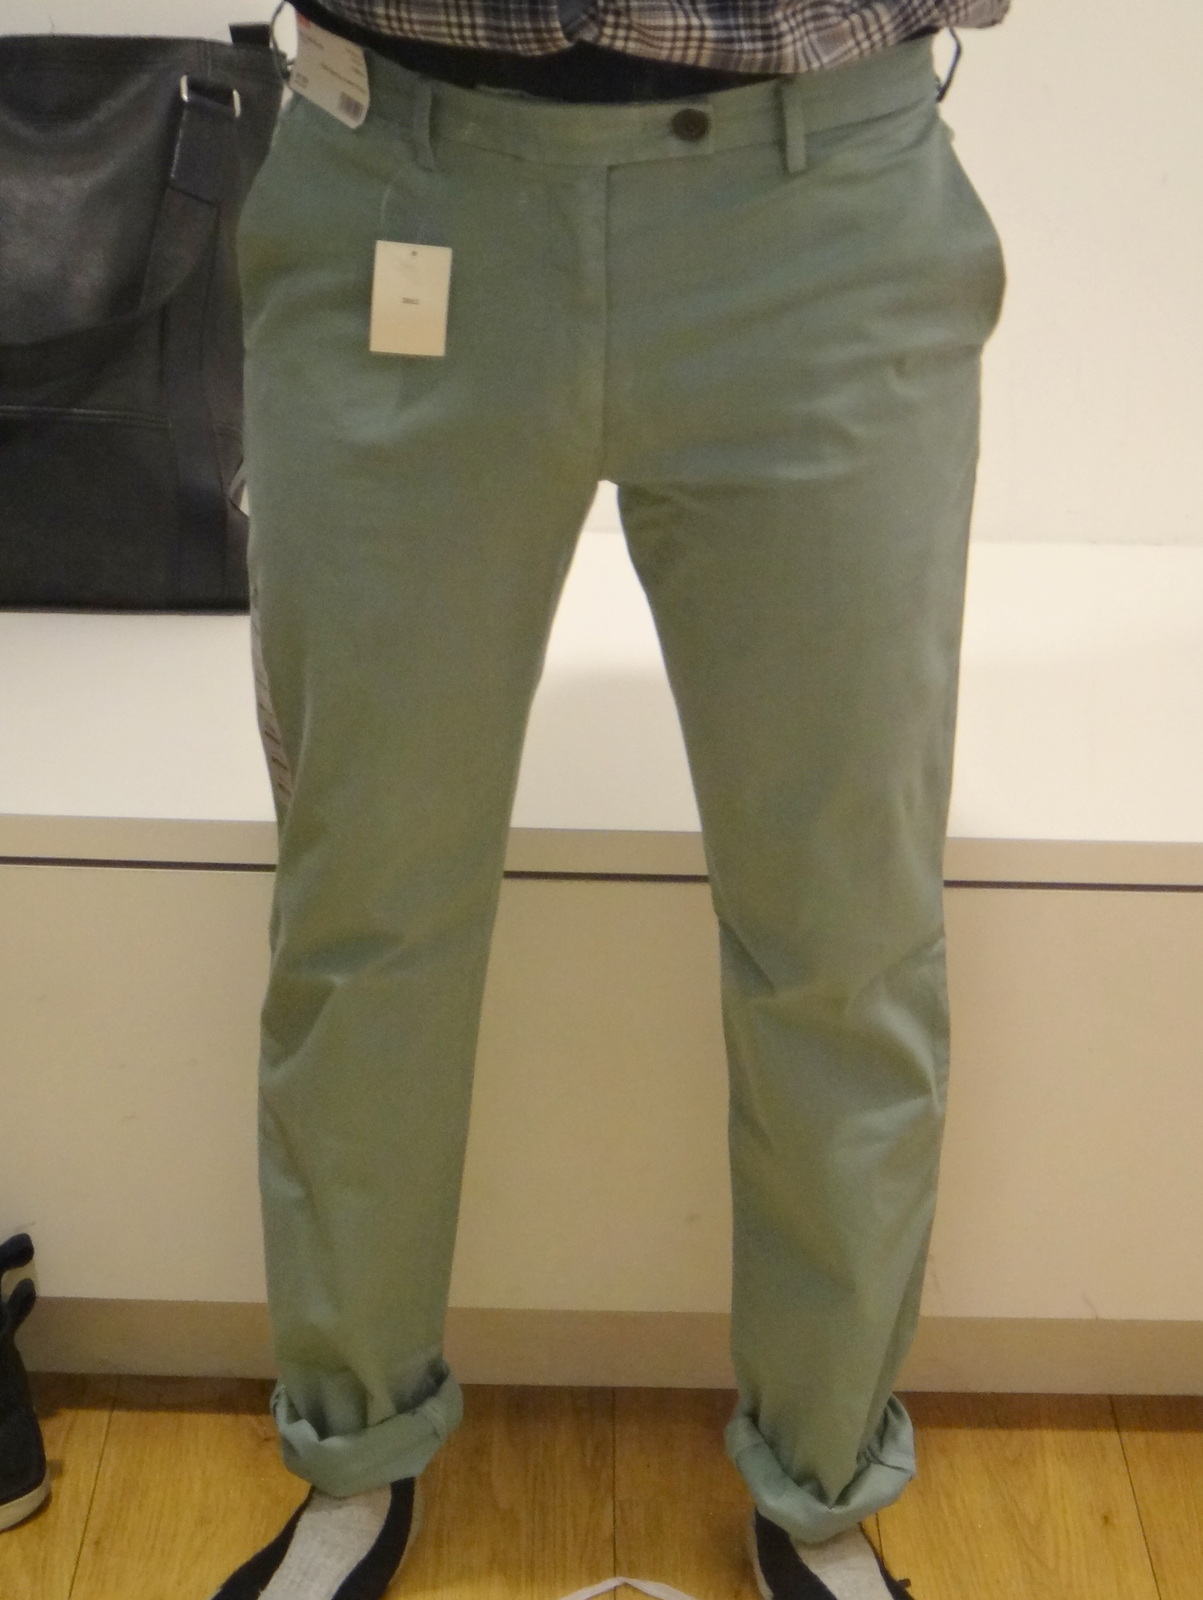 Uniqlo Dress Pants and Chino Fits : r/frugalmalefashion